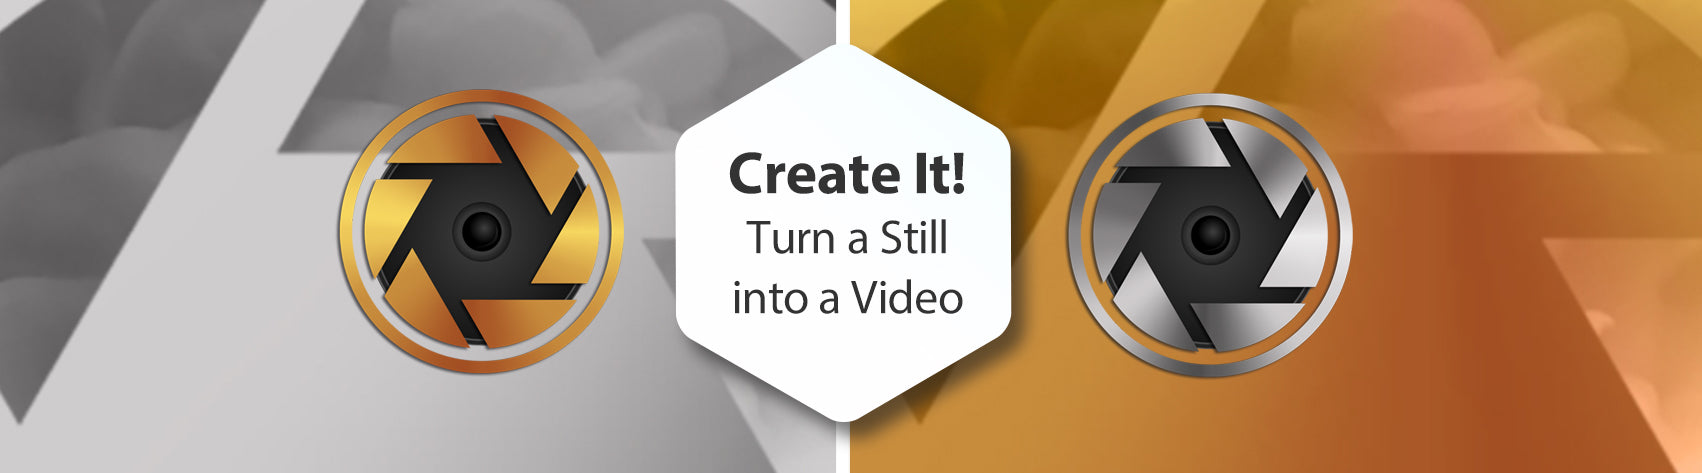 Create It! Turn a Still Into a Video